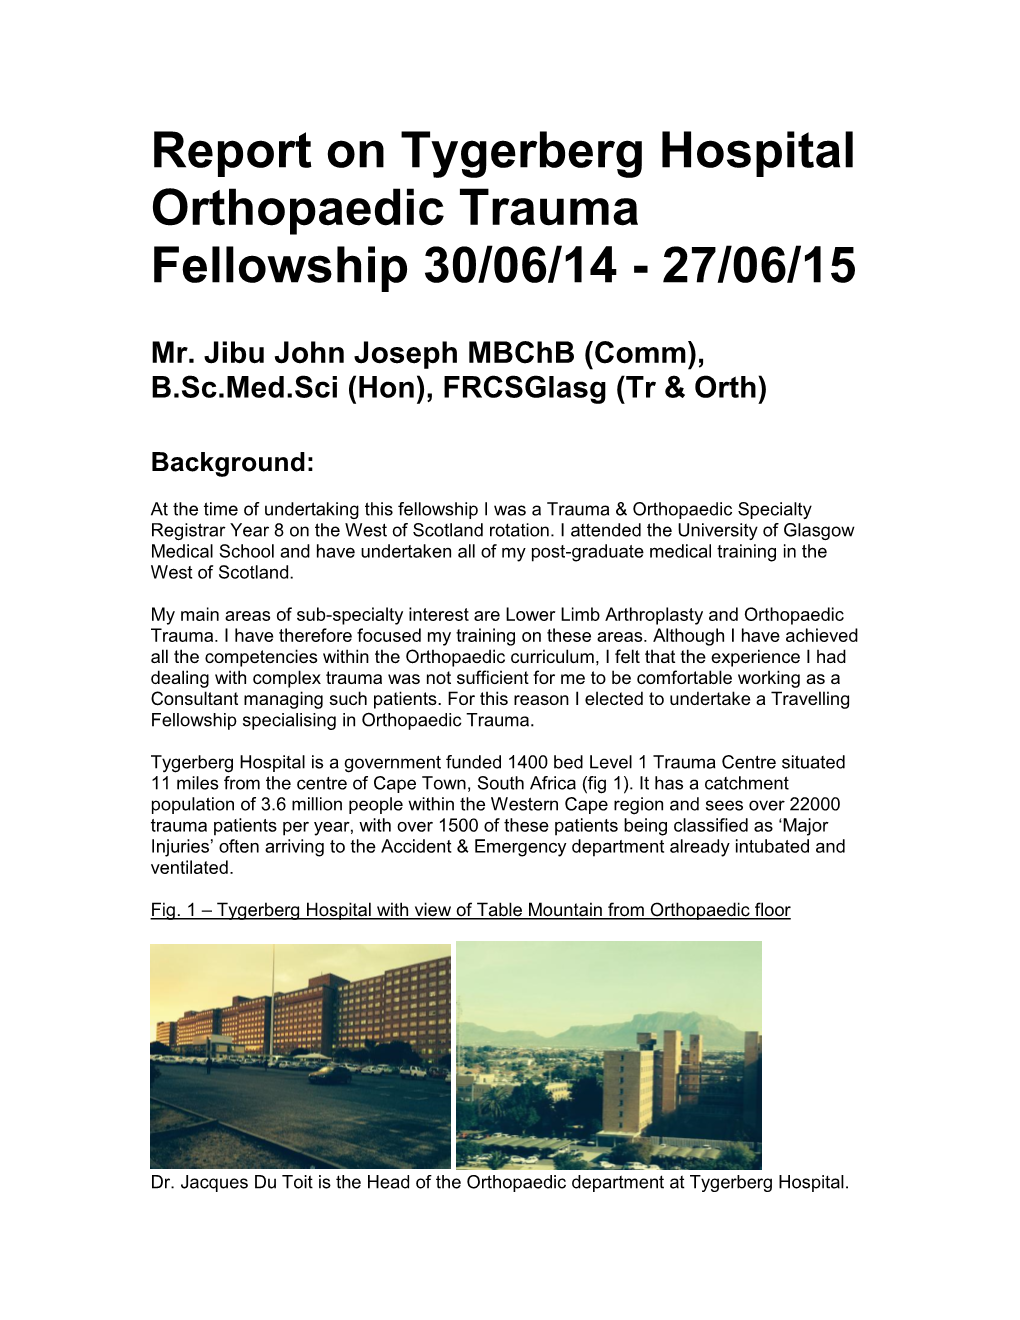 Report on Tygerberg Hospital Orthopaedic Trauma Fellowship 30/06/14 - 27/06/15